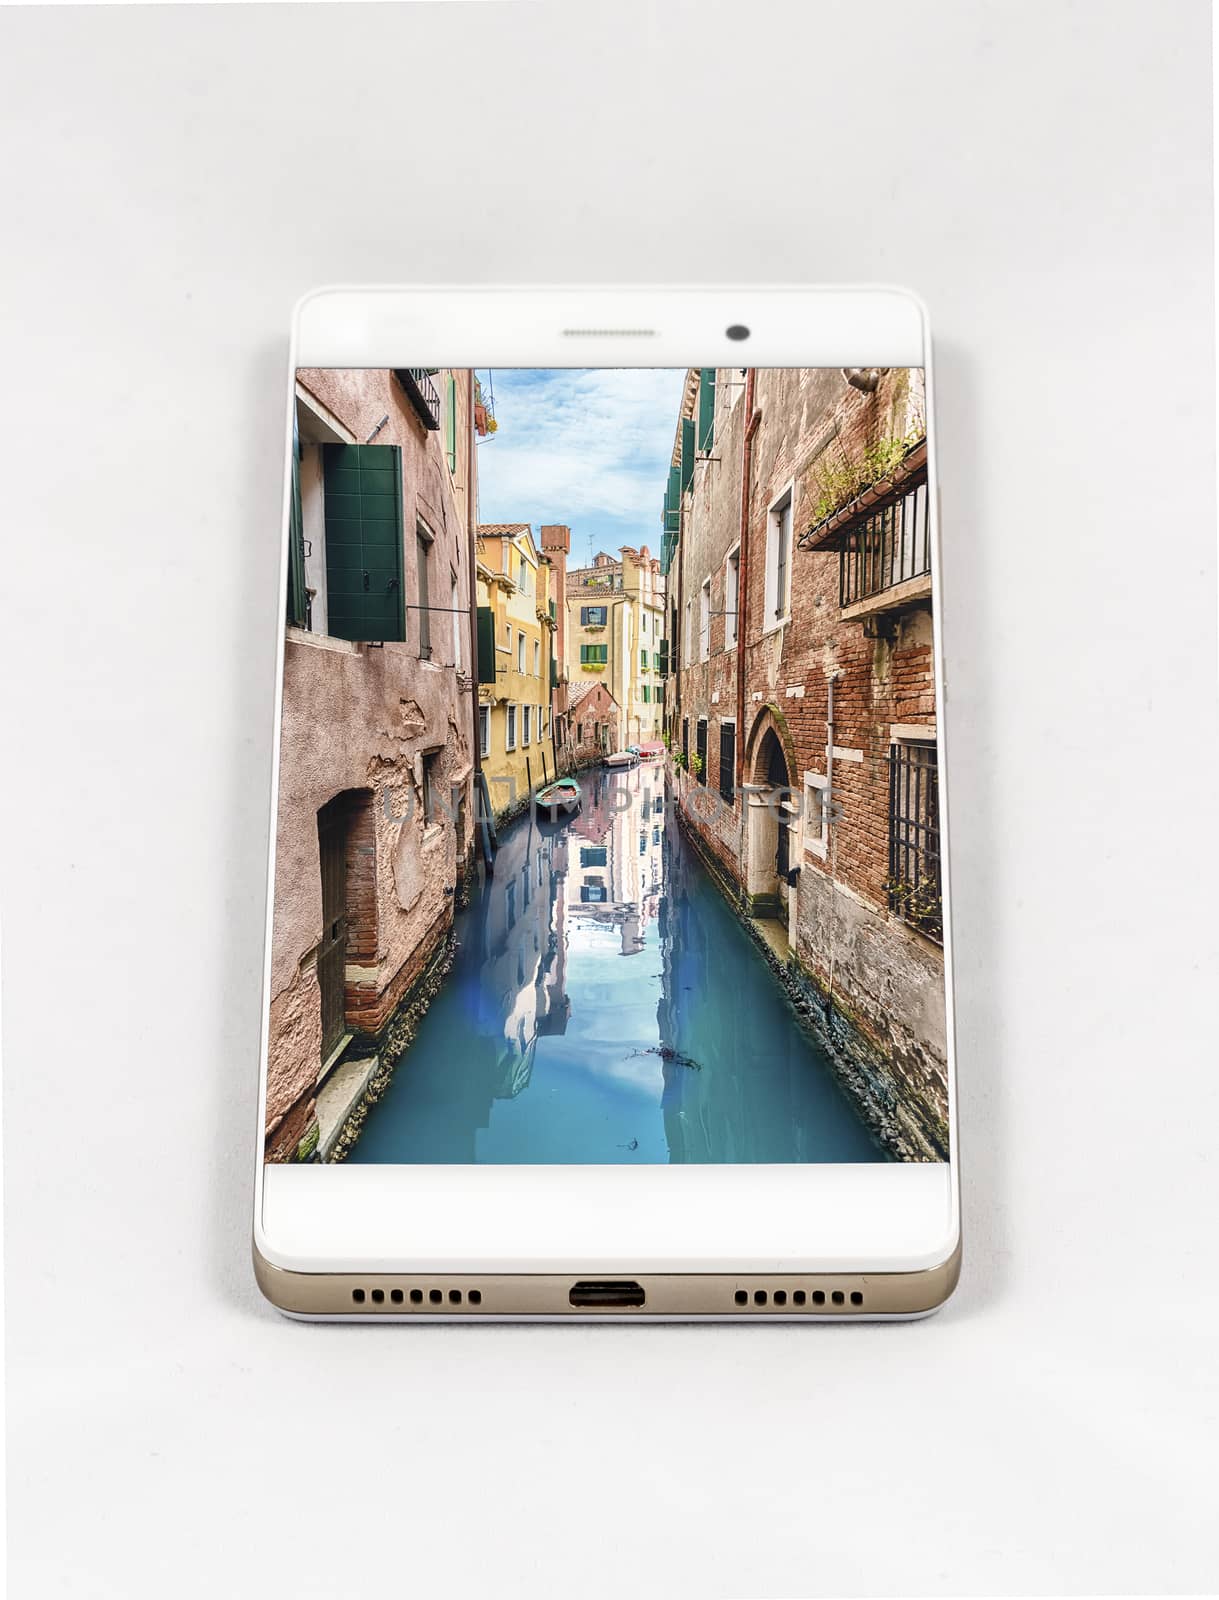 Modern smartphone displaying full screen picture of Venice, Ital by marcorubino